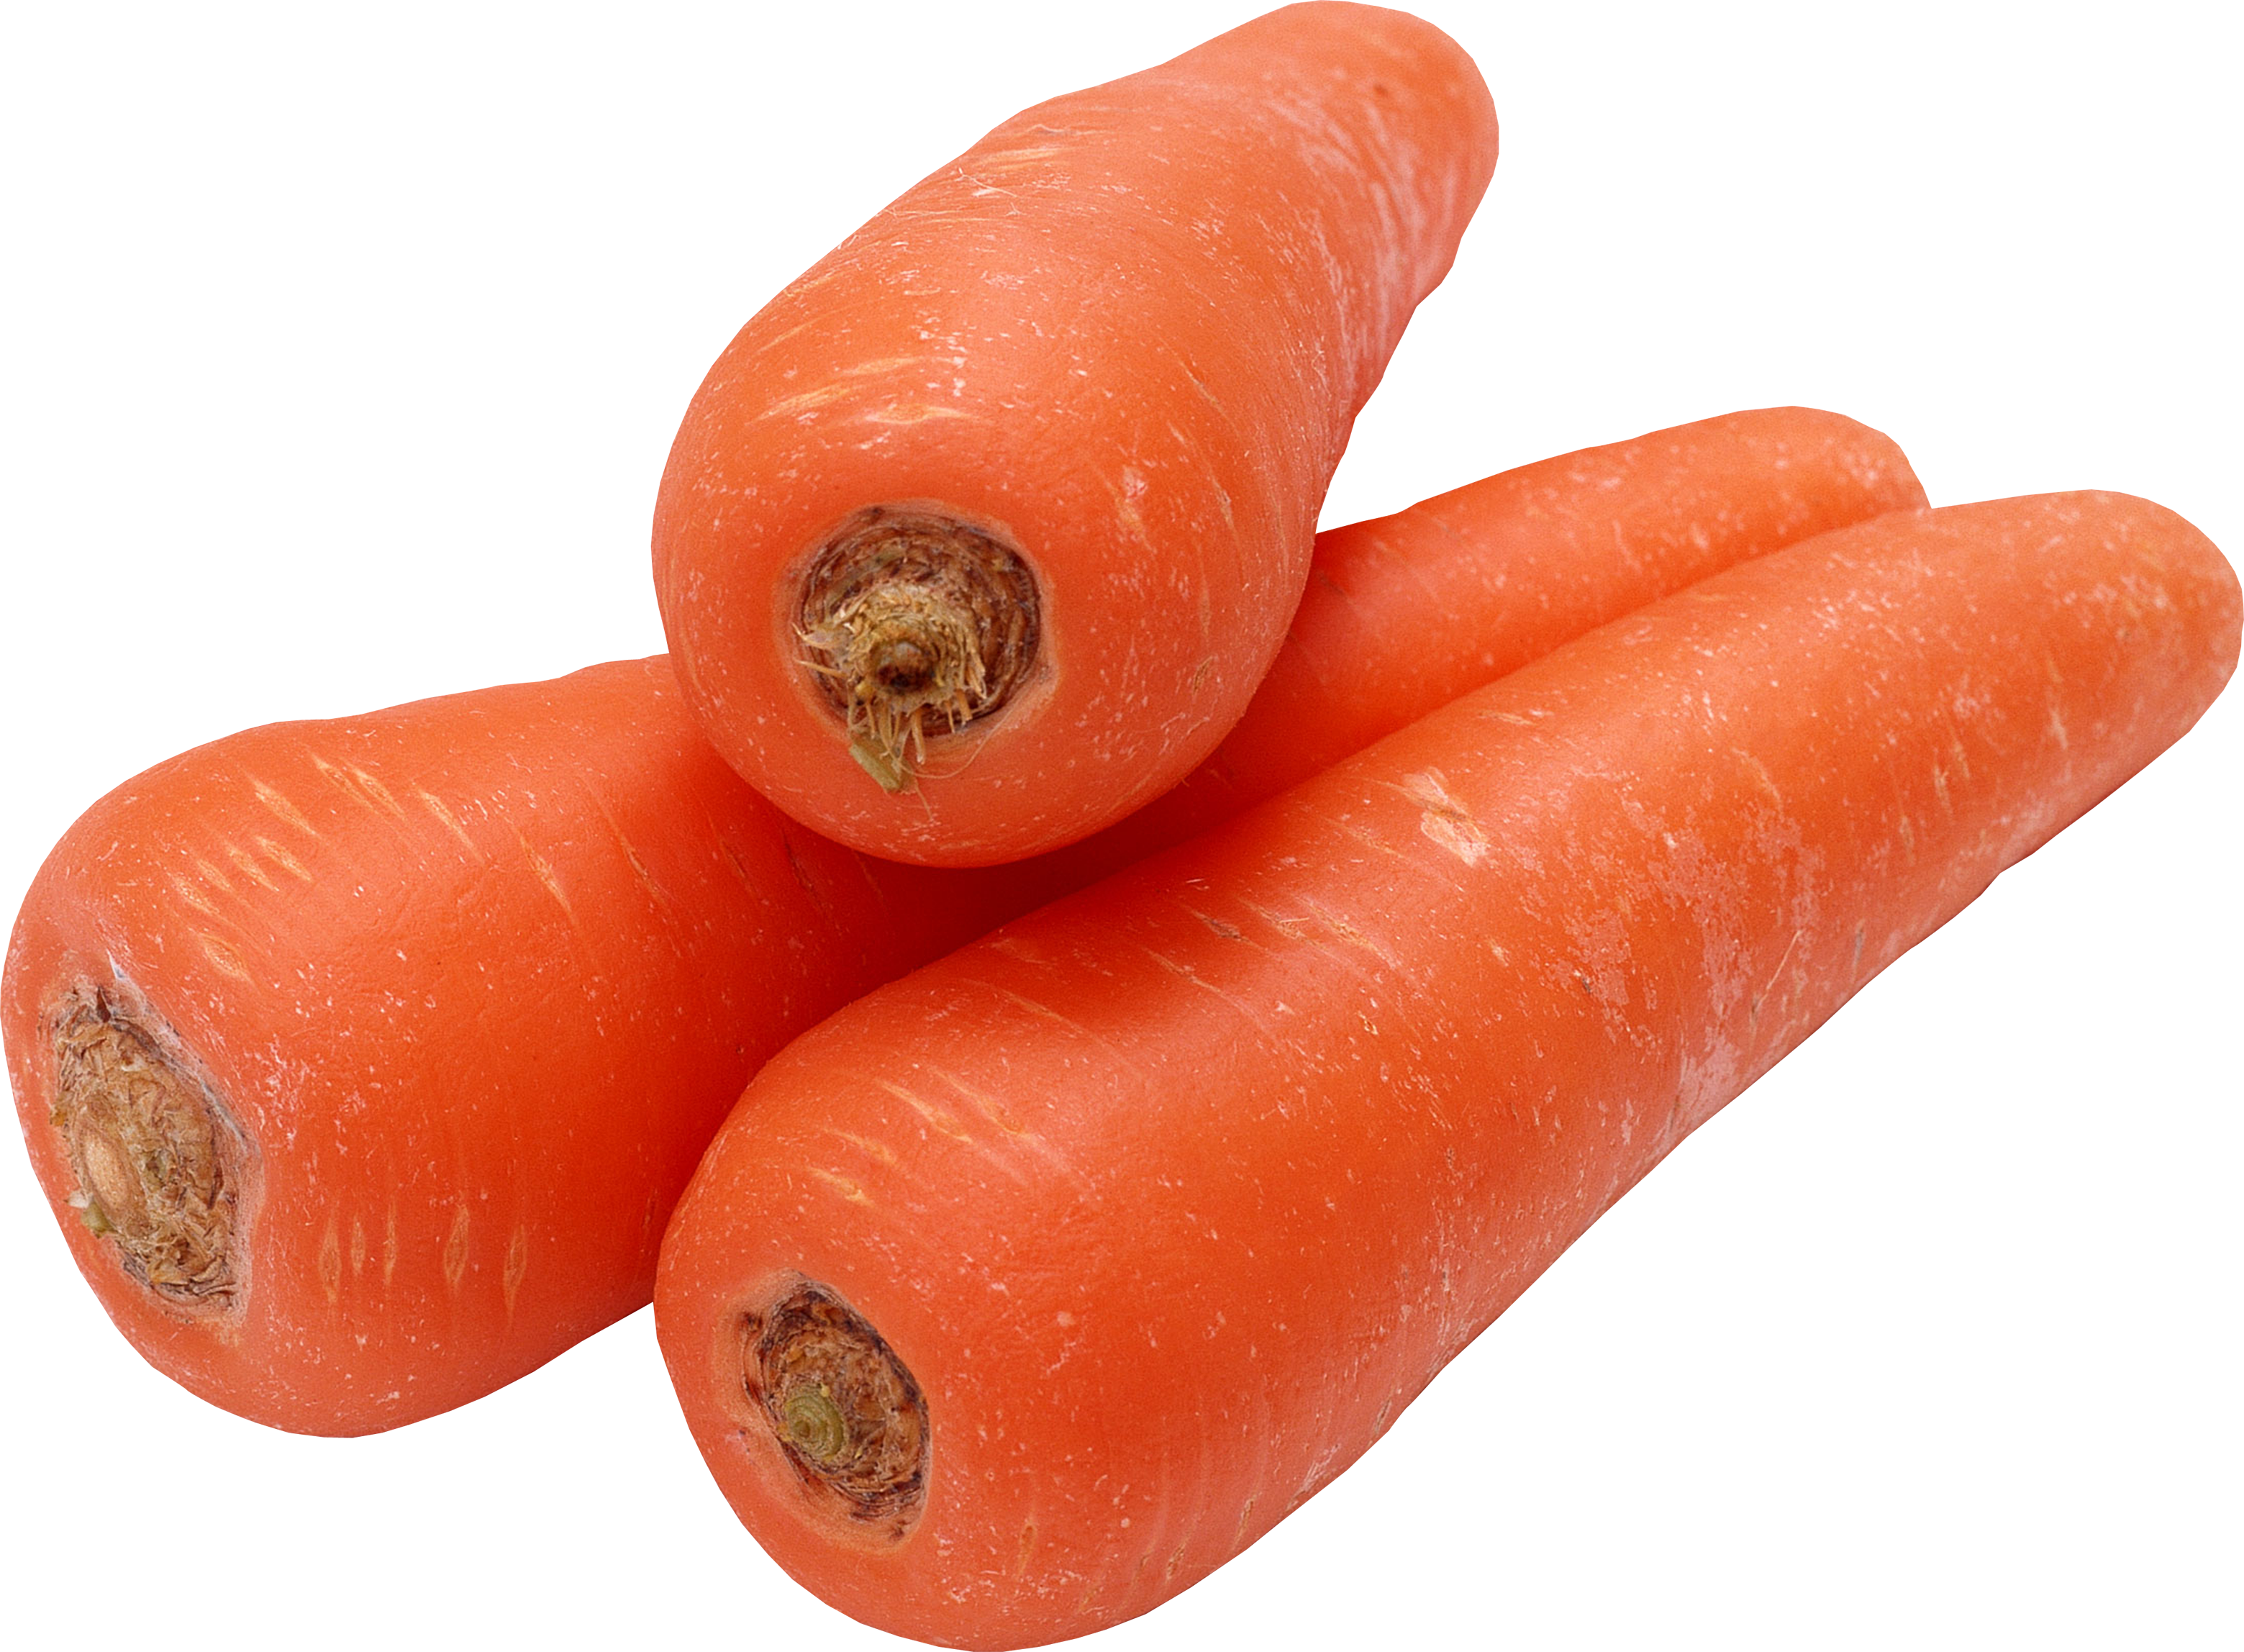 Carrot HD PNG - 117300